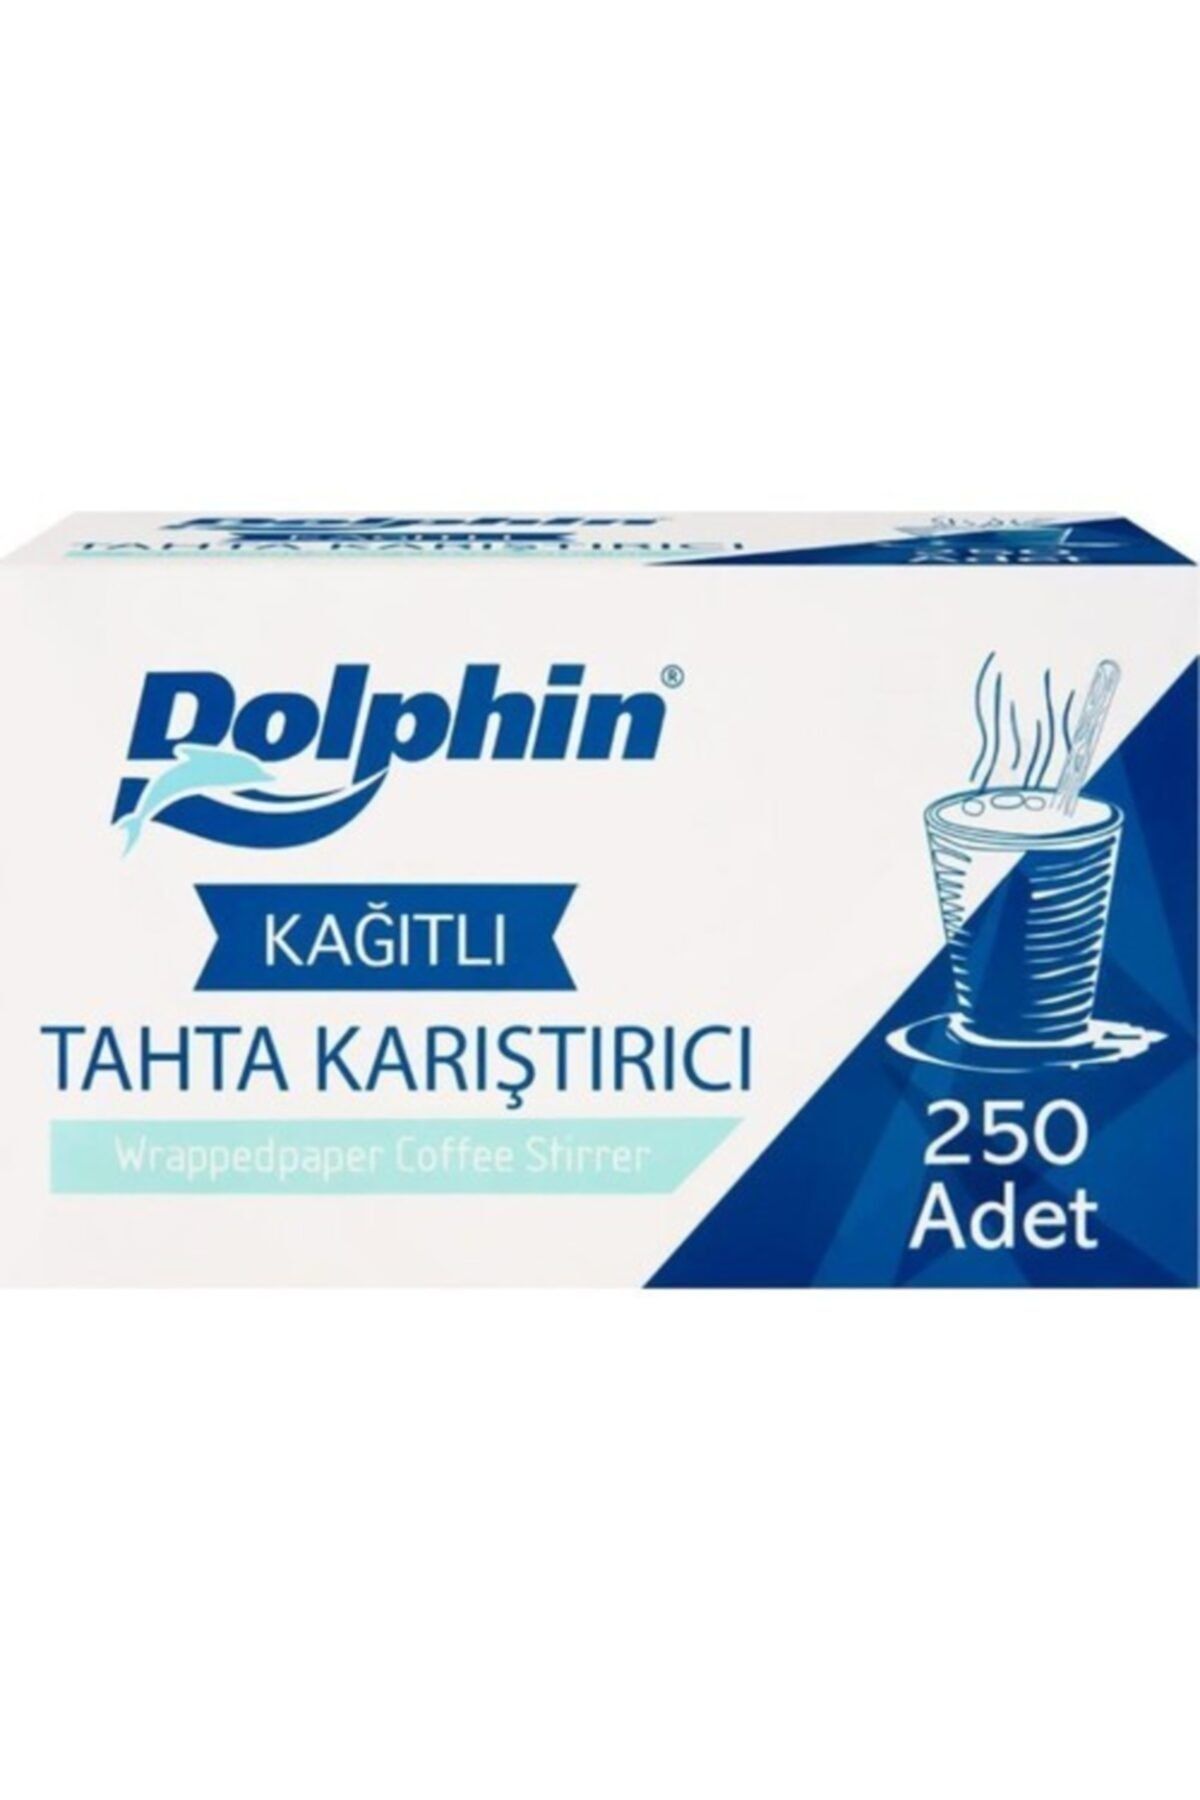 Dolphin Kağıtlı Tahta Karıştırıcı 250li